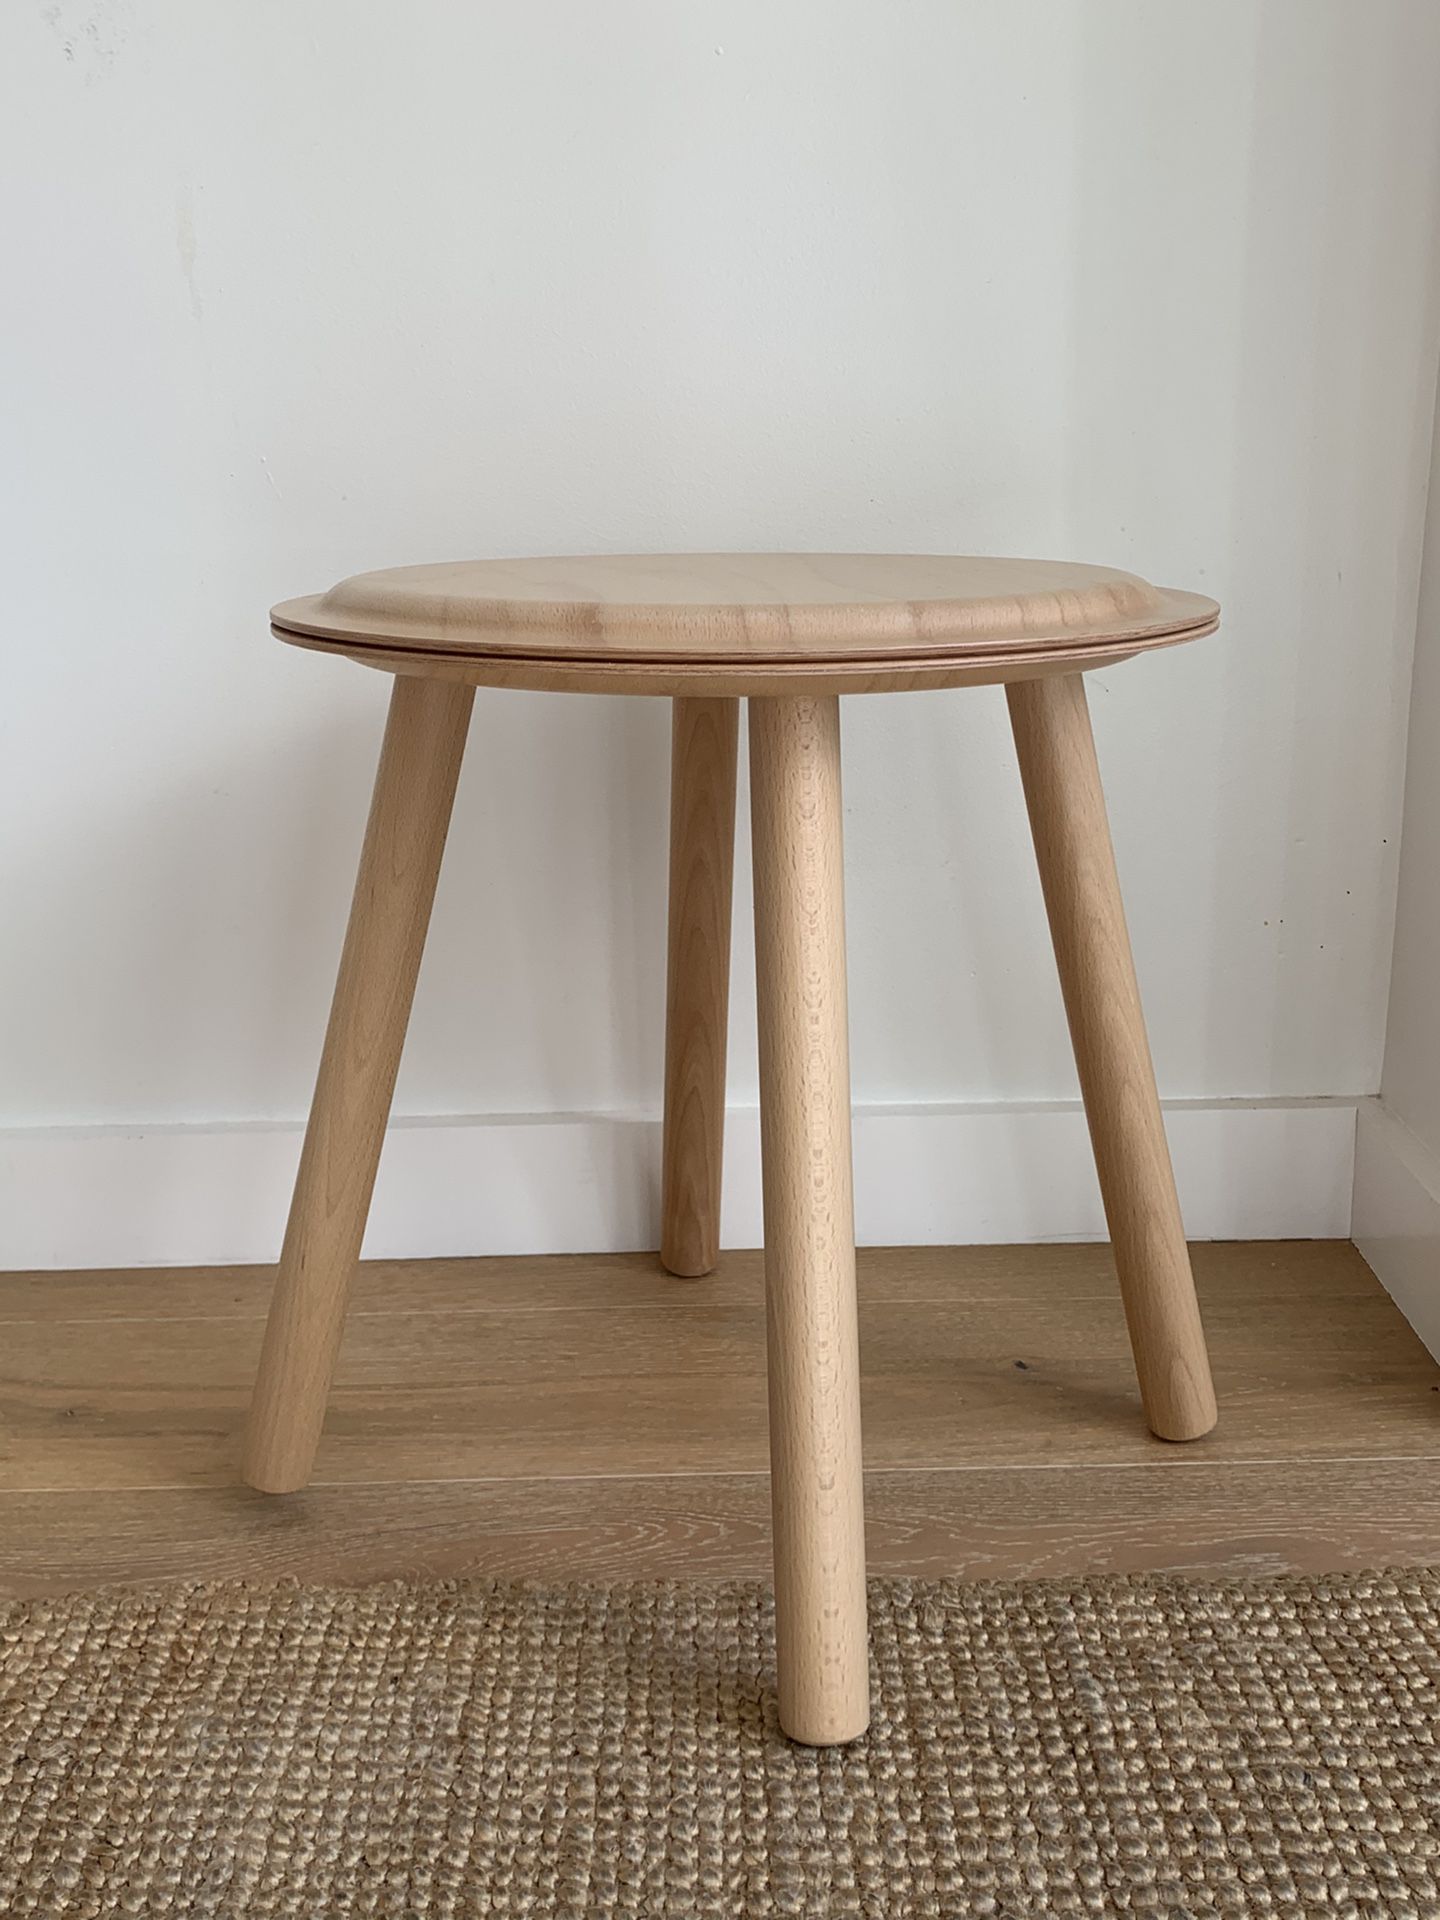 IKEA stool/side table